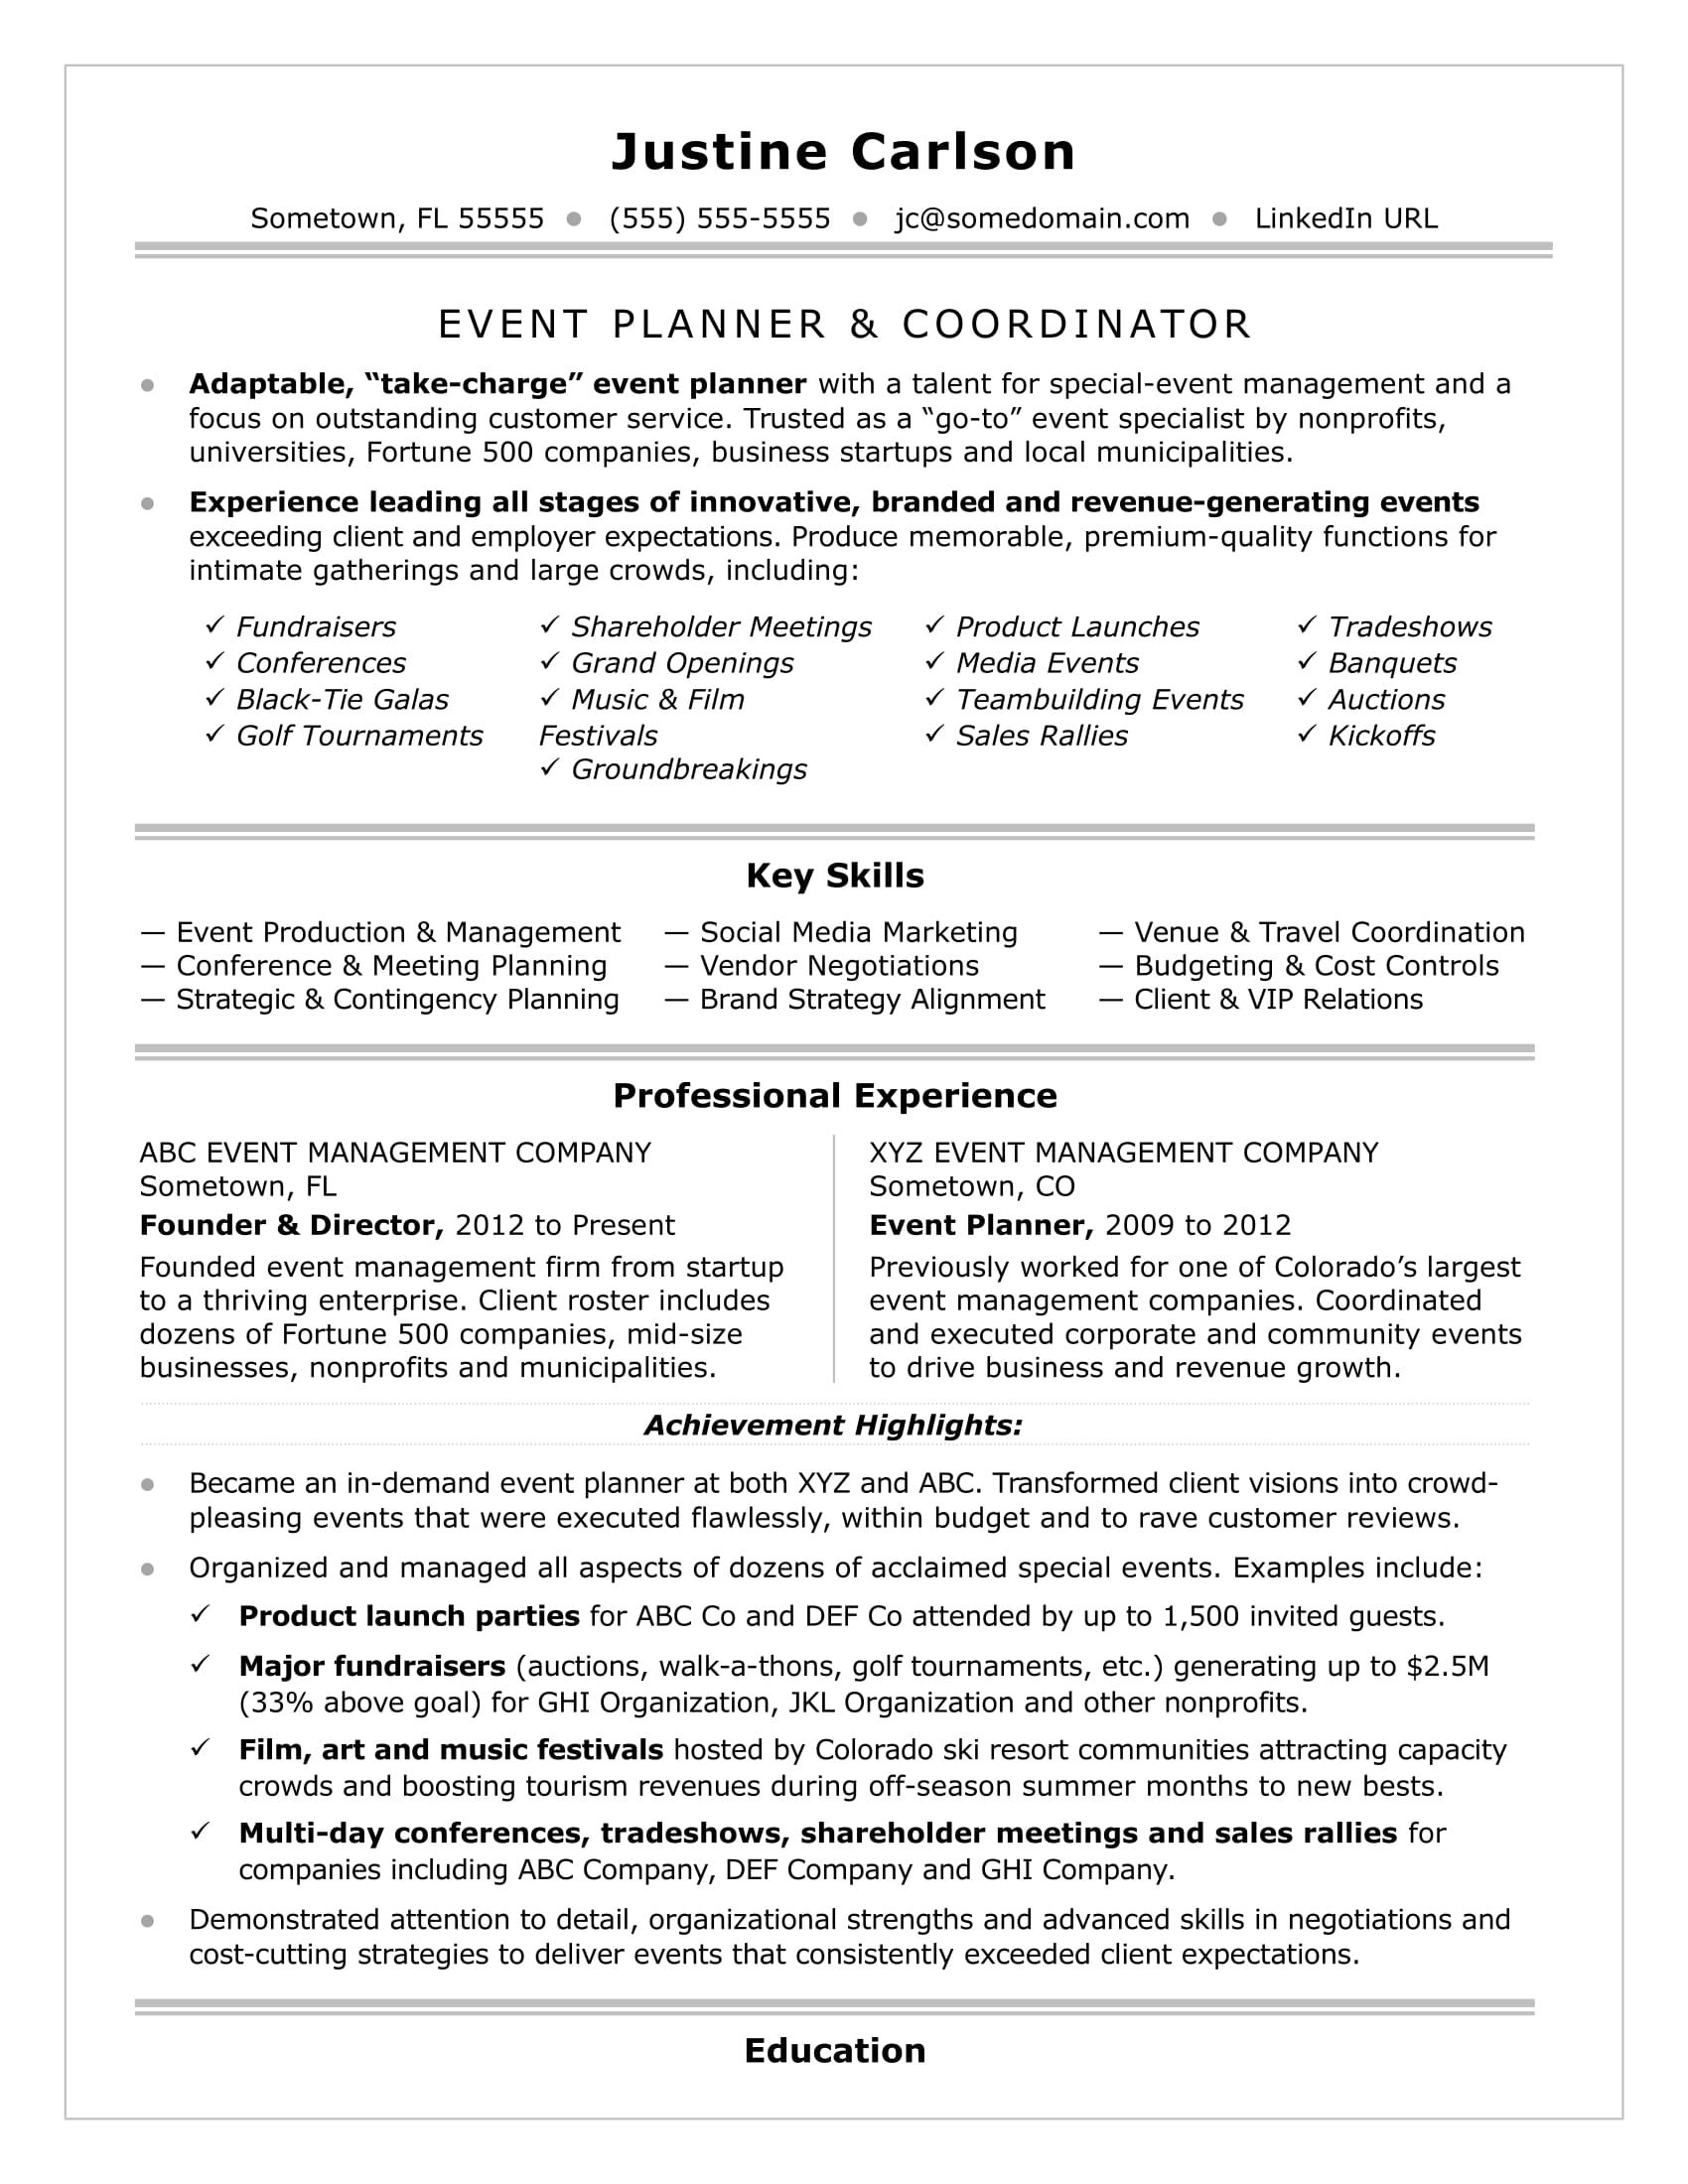 Event Coordinator Resume Sample Event Planner Resume Event Planning Resume Event Coordinator Jobs